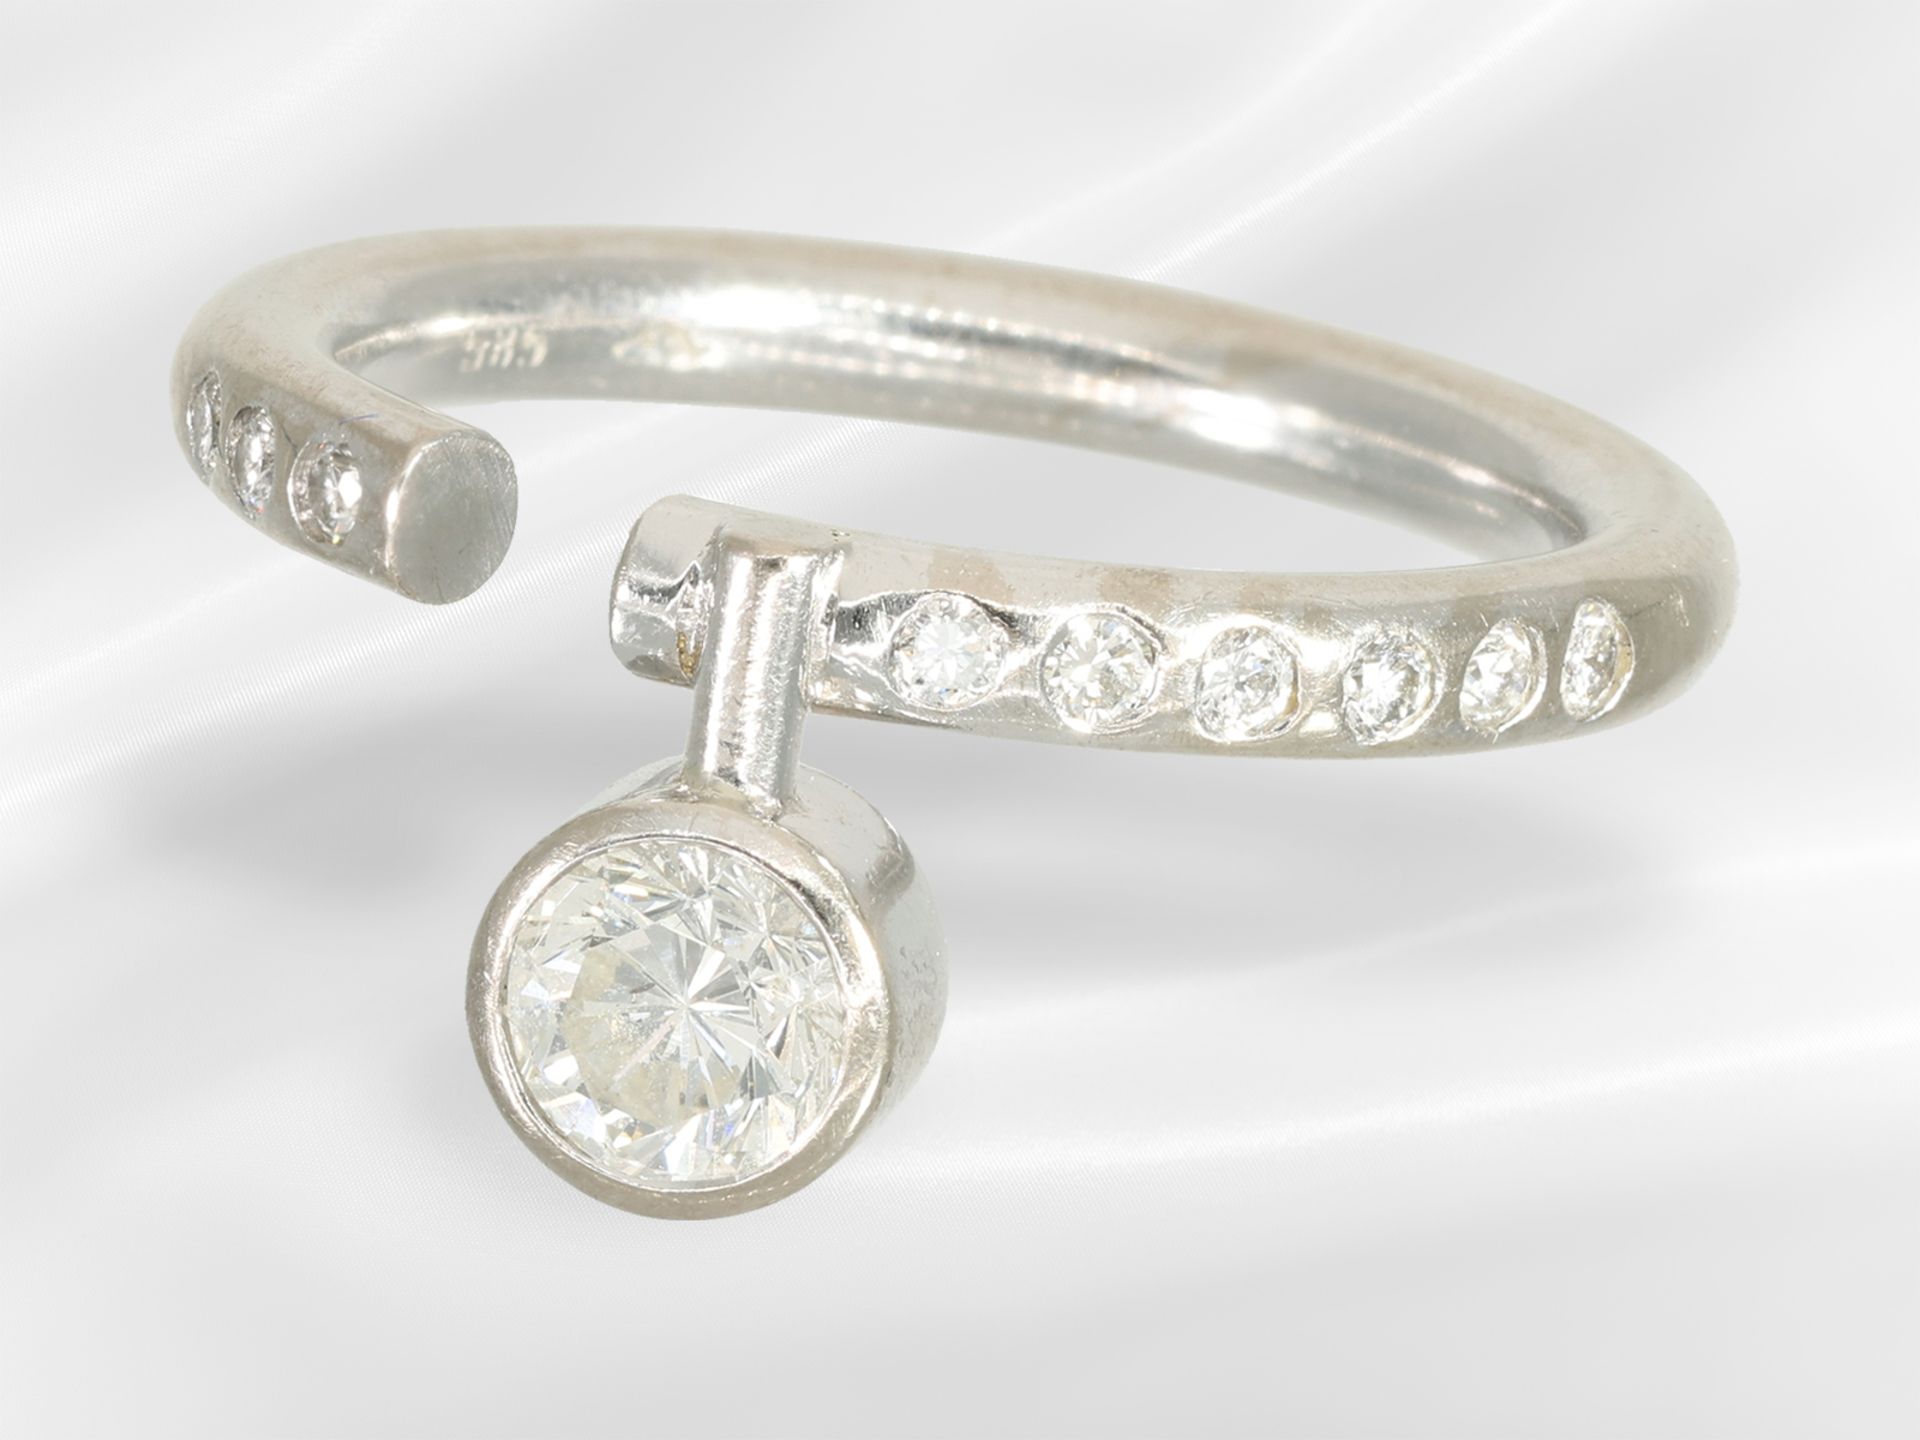 Ring: modern designer ring set with brilliant-cut diamonds - Image 3 of 3